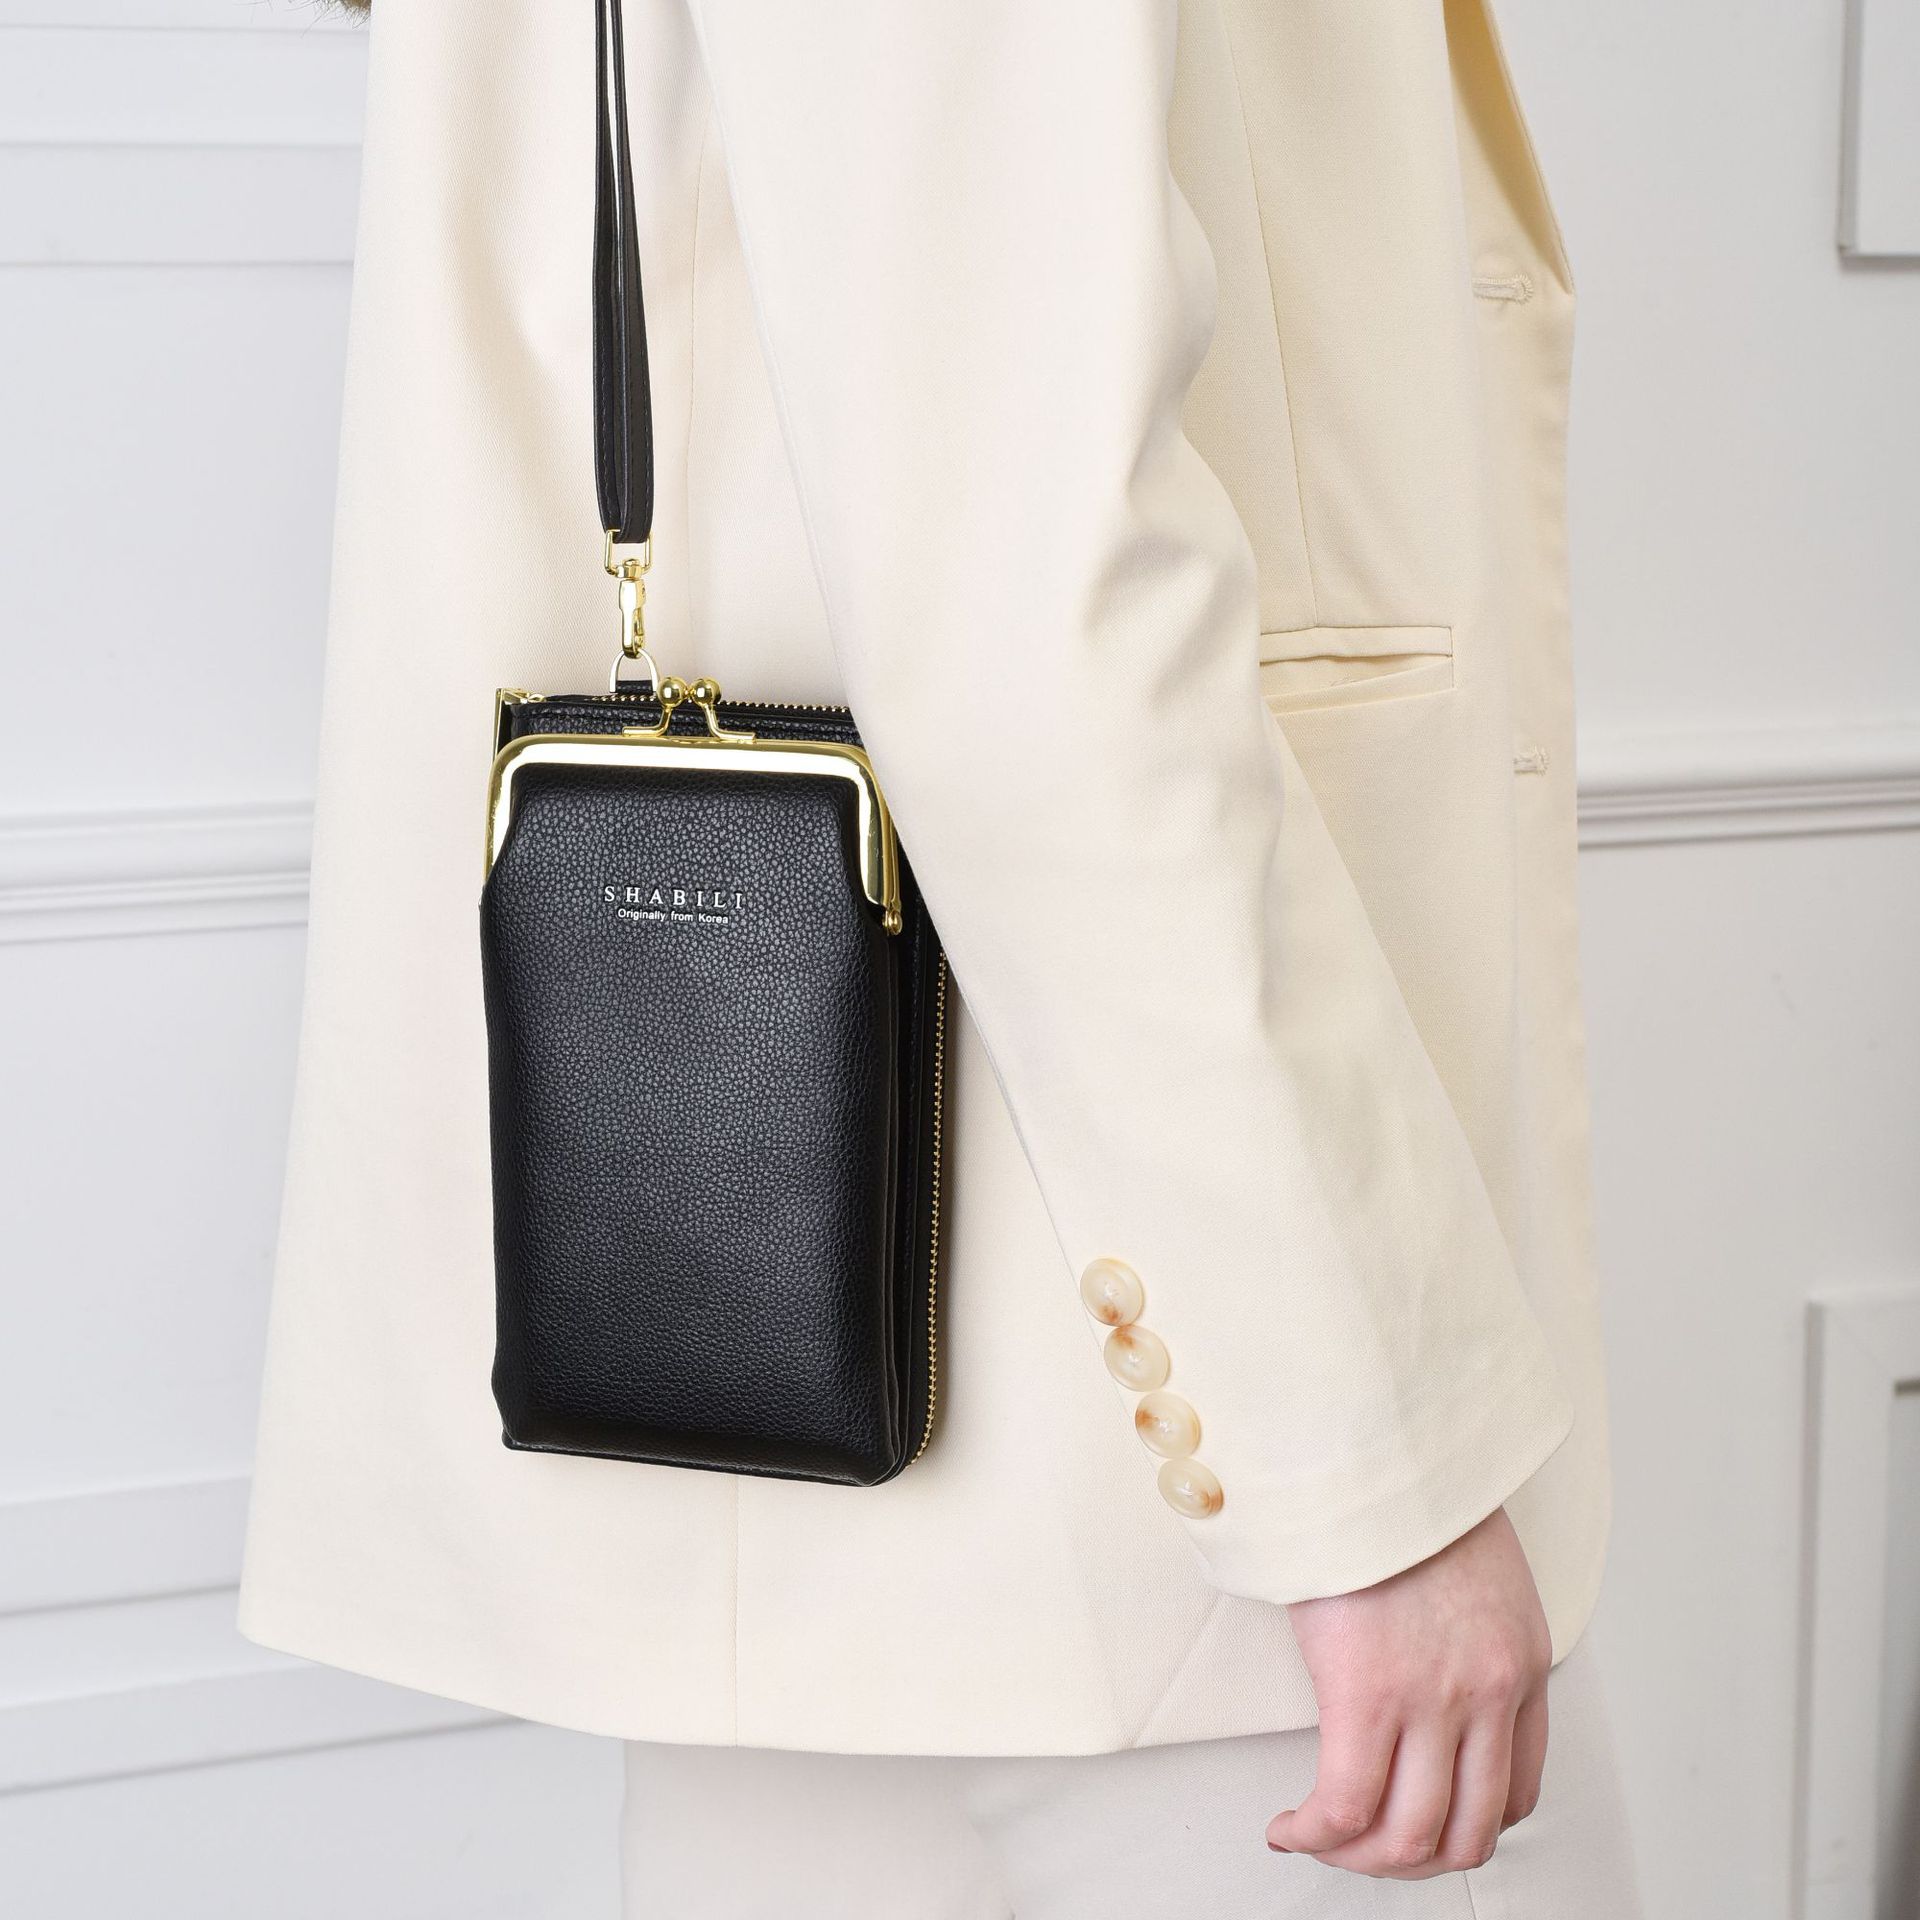 Clip Bag New Women's Long Wallet Women's Cross-Border Large Capacity Fashion Shoulder Messenger Bag Solid Color Phone Bag